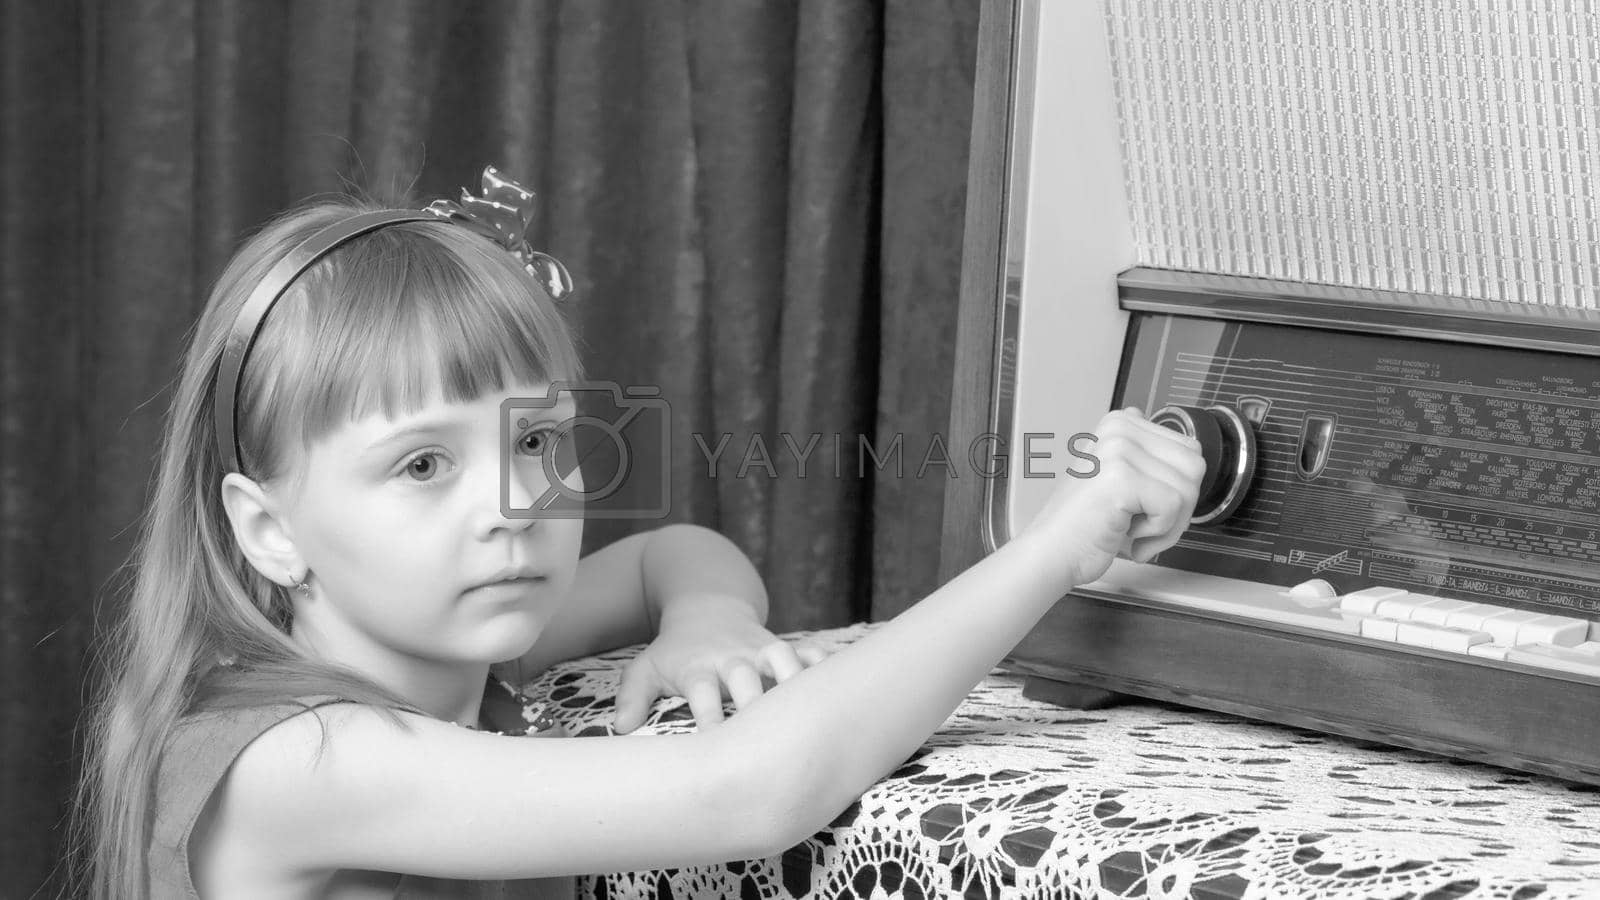 Royalty free image of The girl turns the volume knob on the old radio. Retro style. by kolesnikov_studio